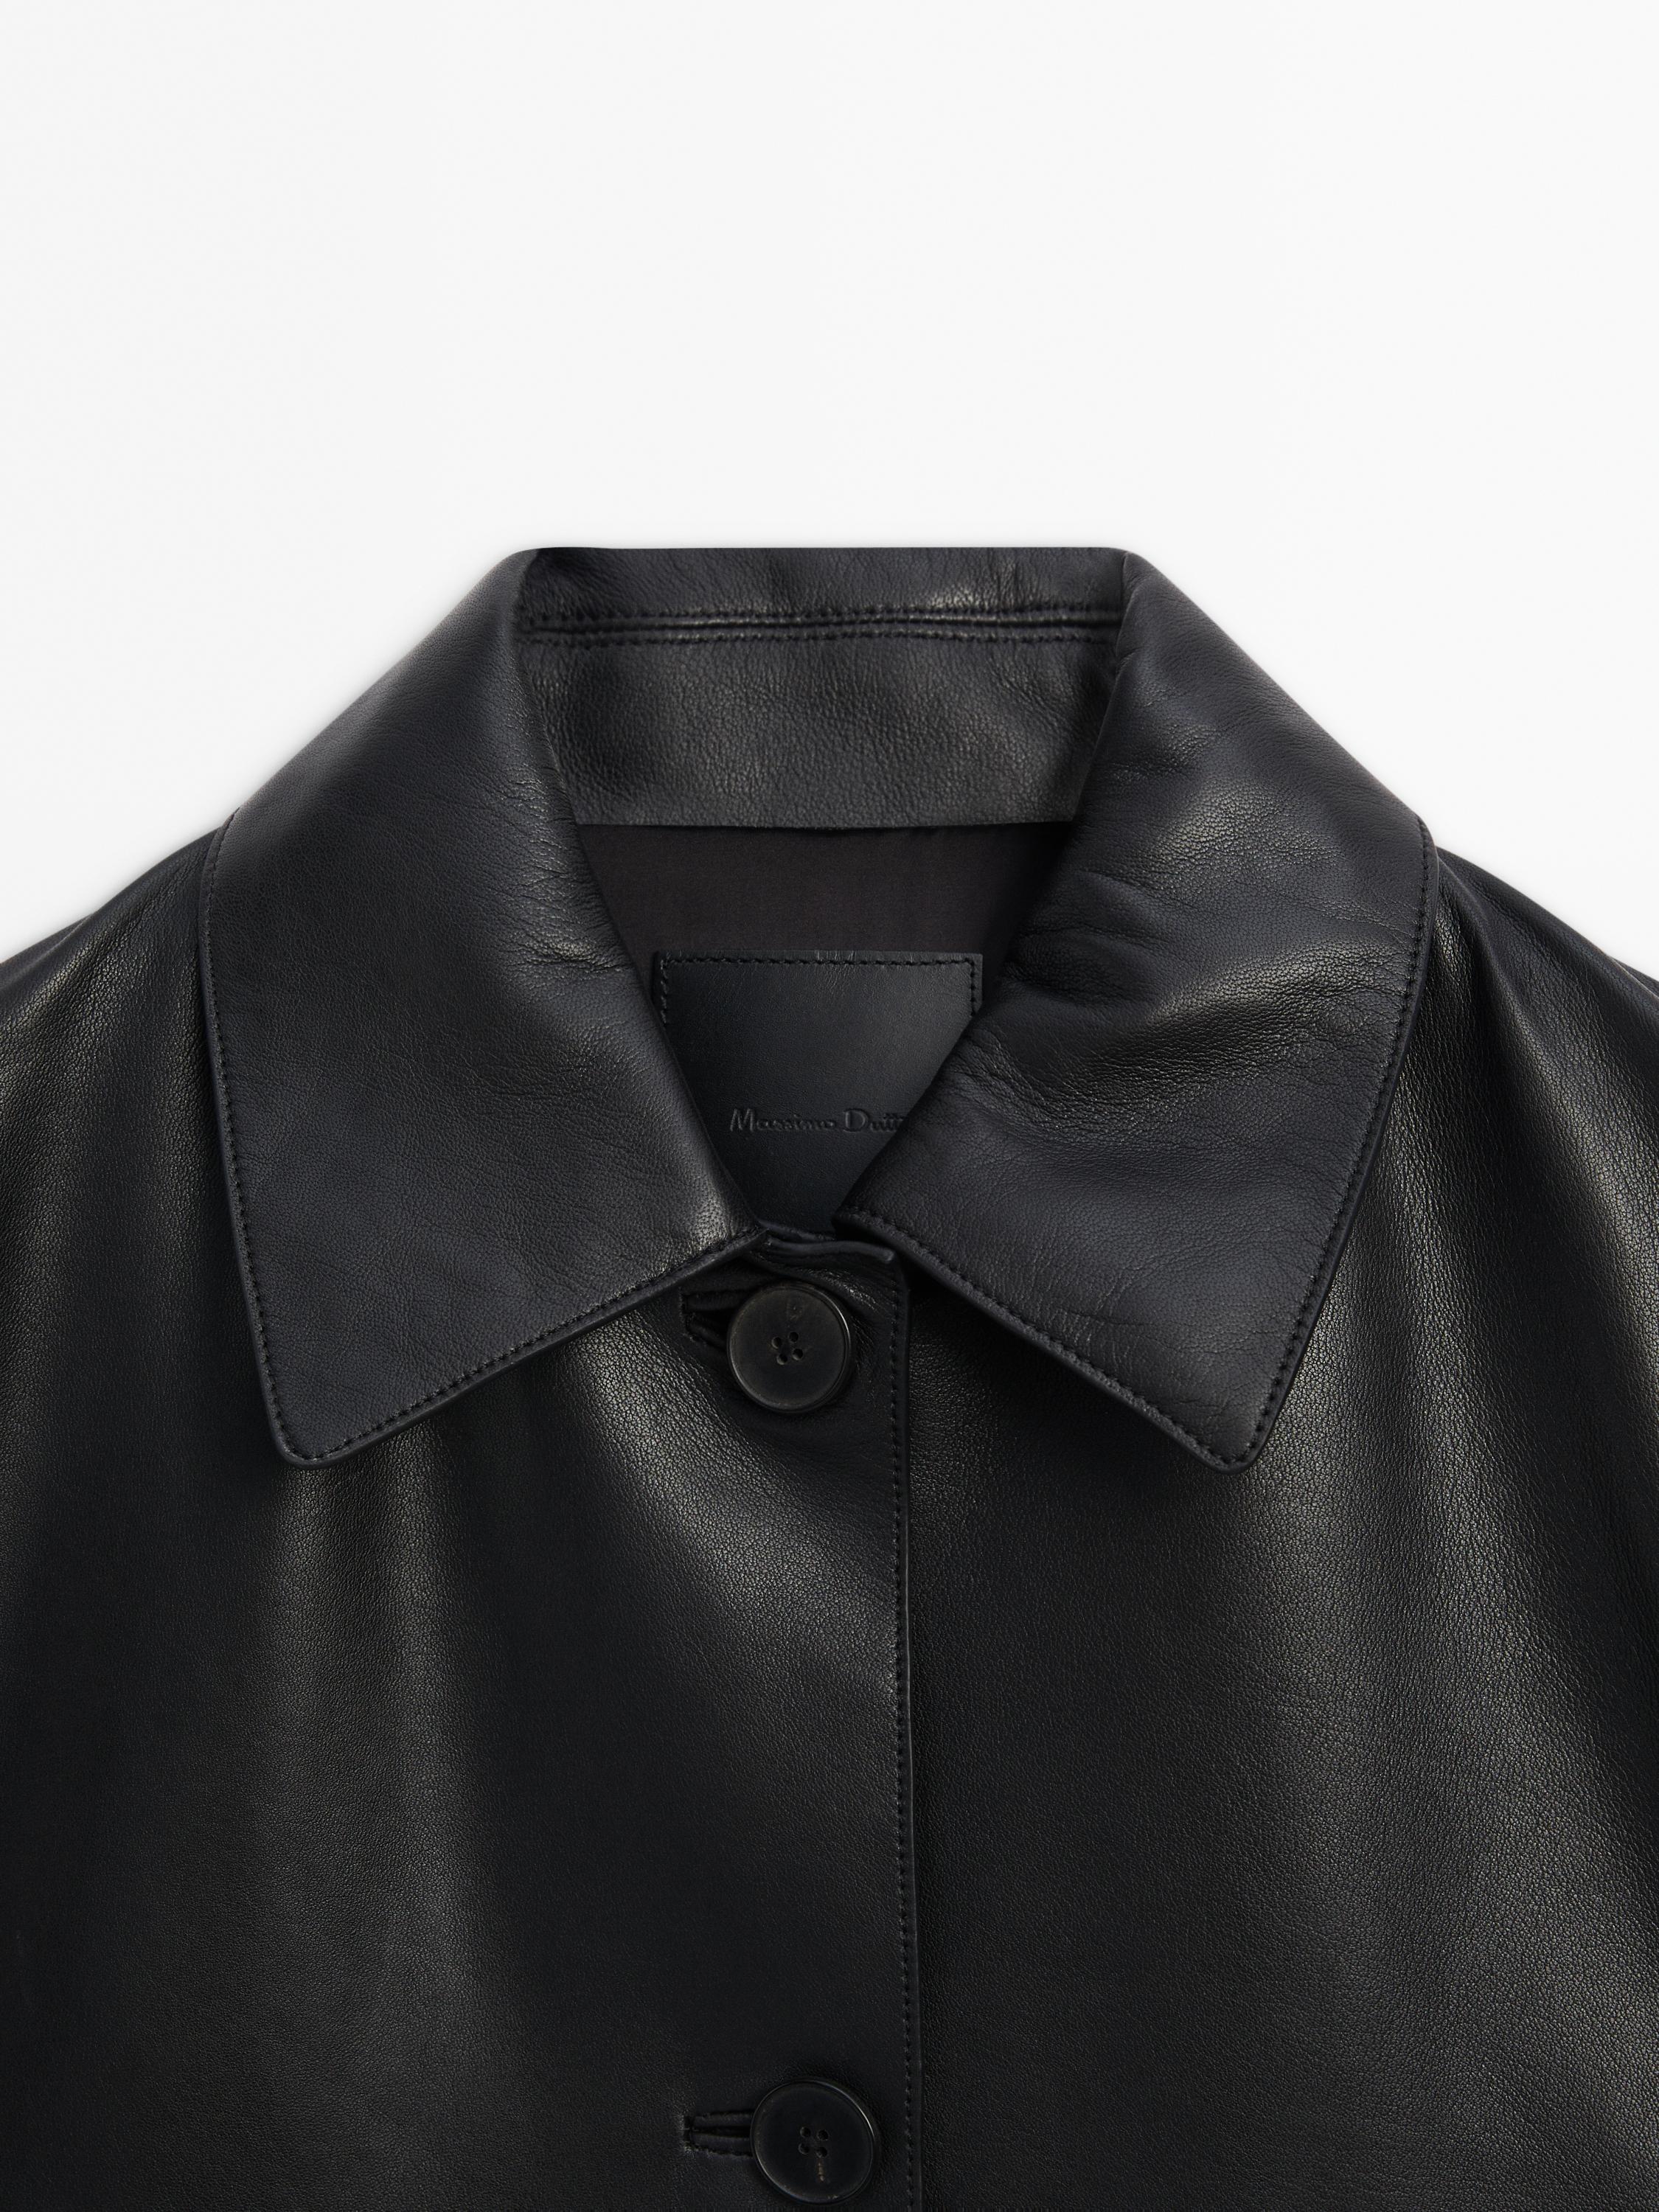 Nappa leather jacket with pockets - Black | ZARA United States